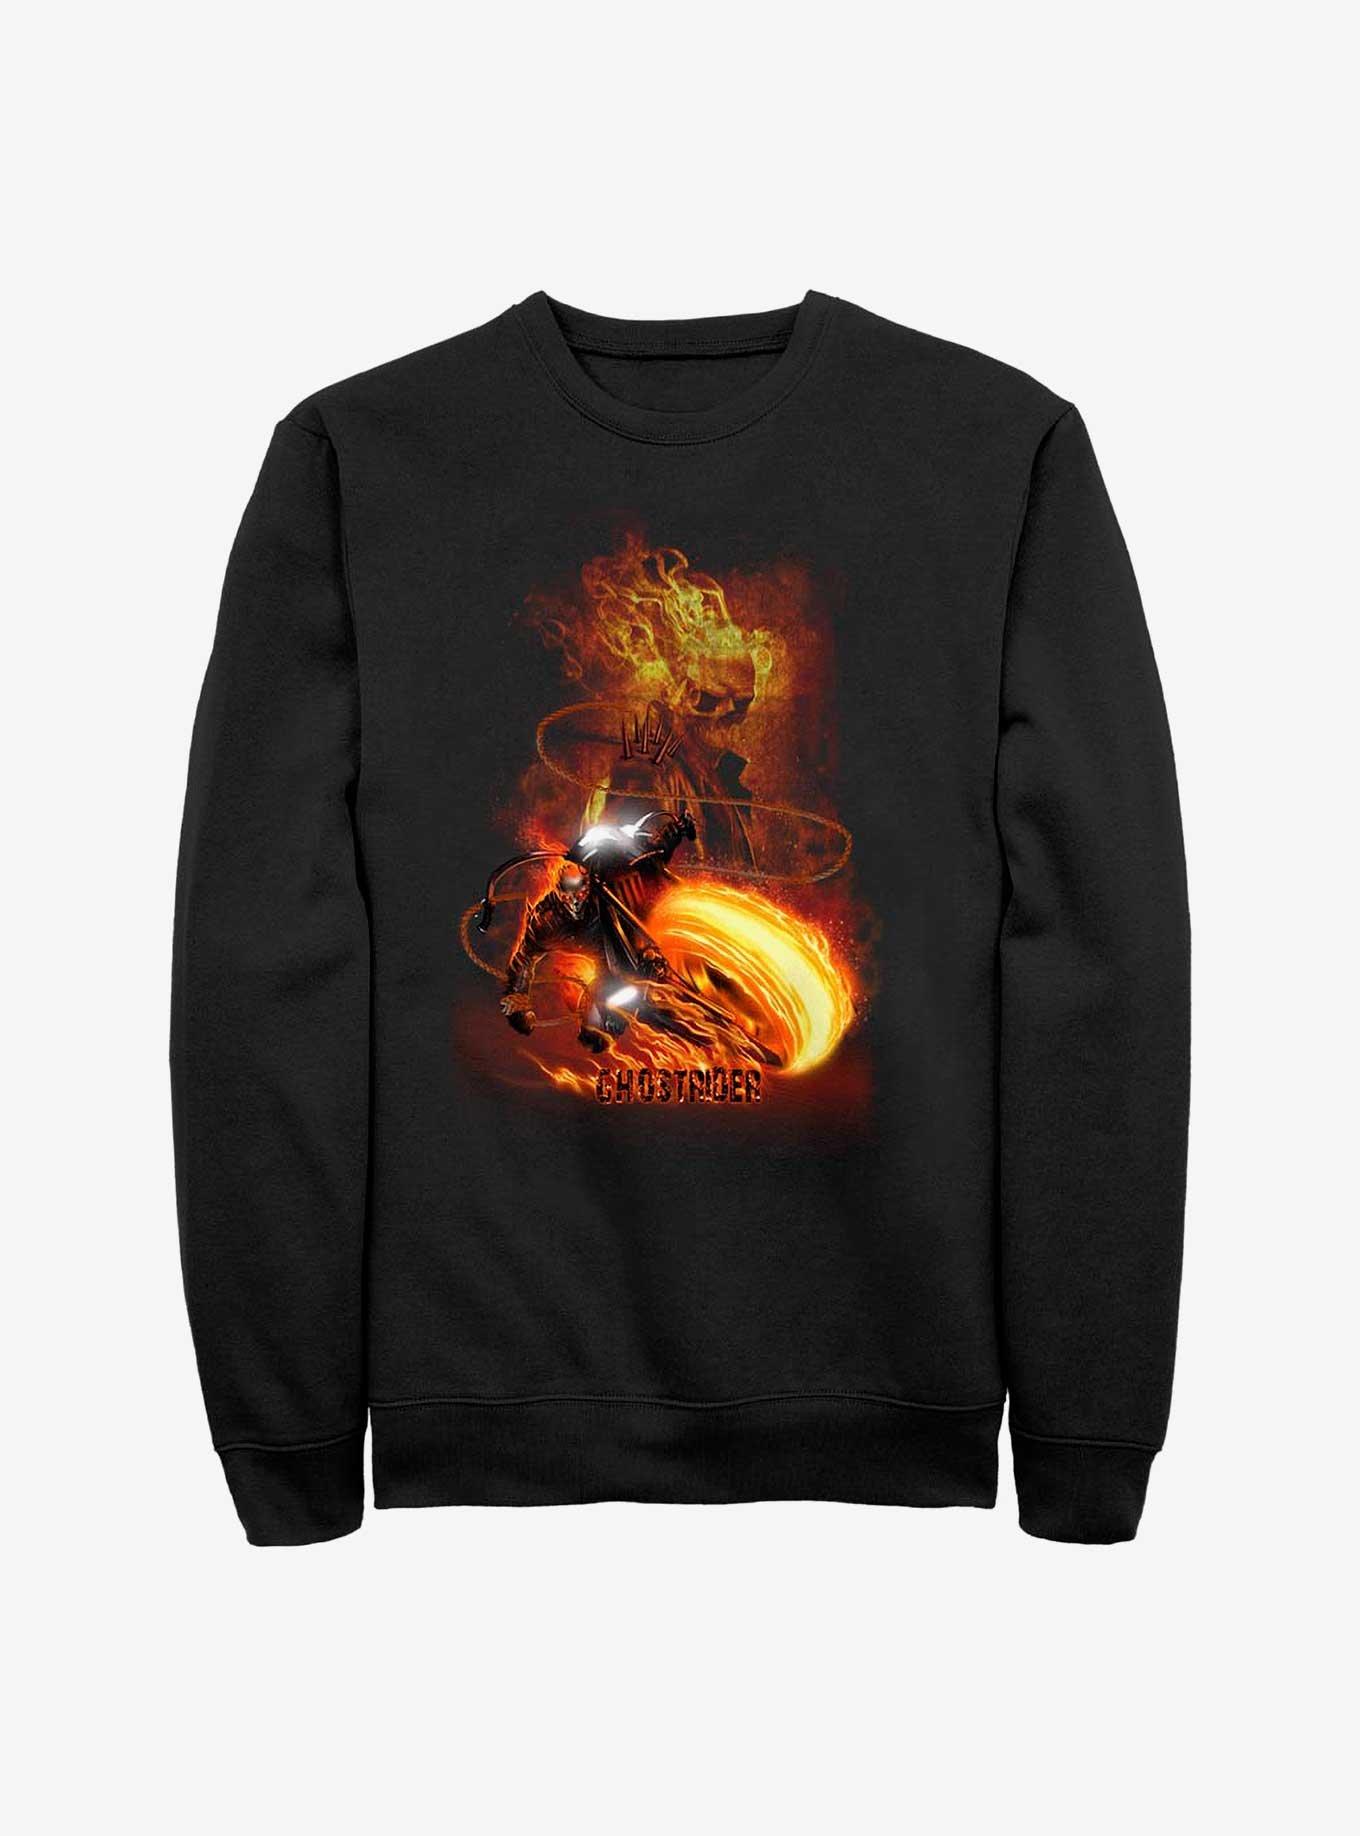 Marvel Ghost Rider Vengeance Sweatshirt